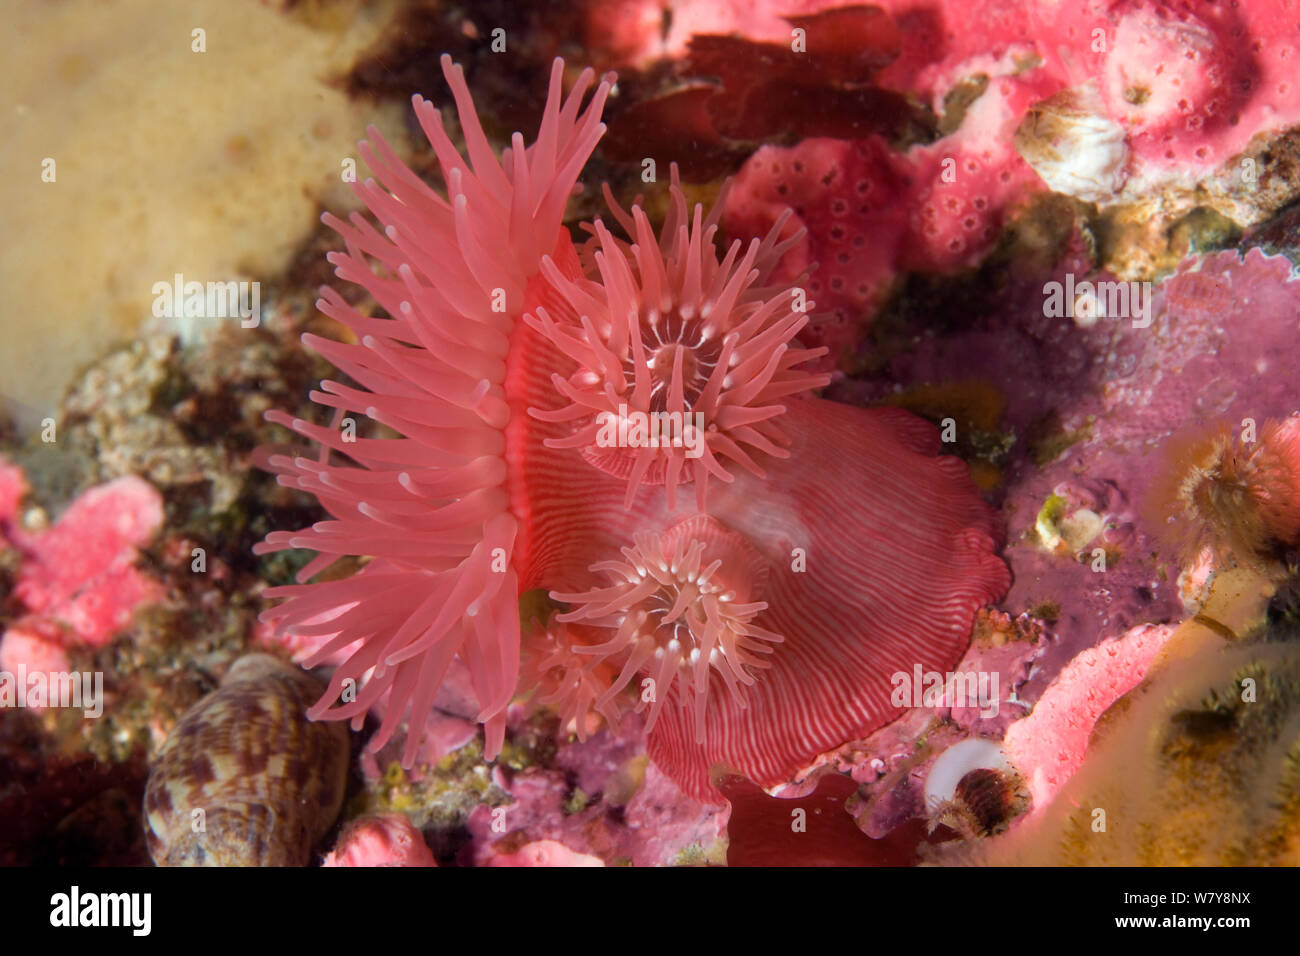 Brooding anemone (Epiactis prolifera), Alaska, United States, North Pacific Ocean. Stock Photo